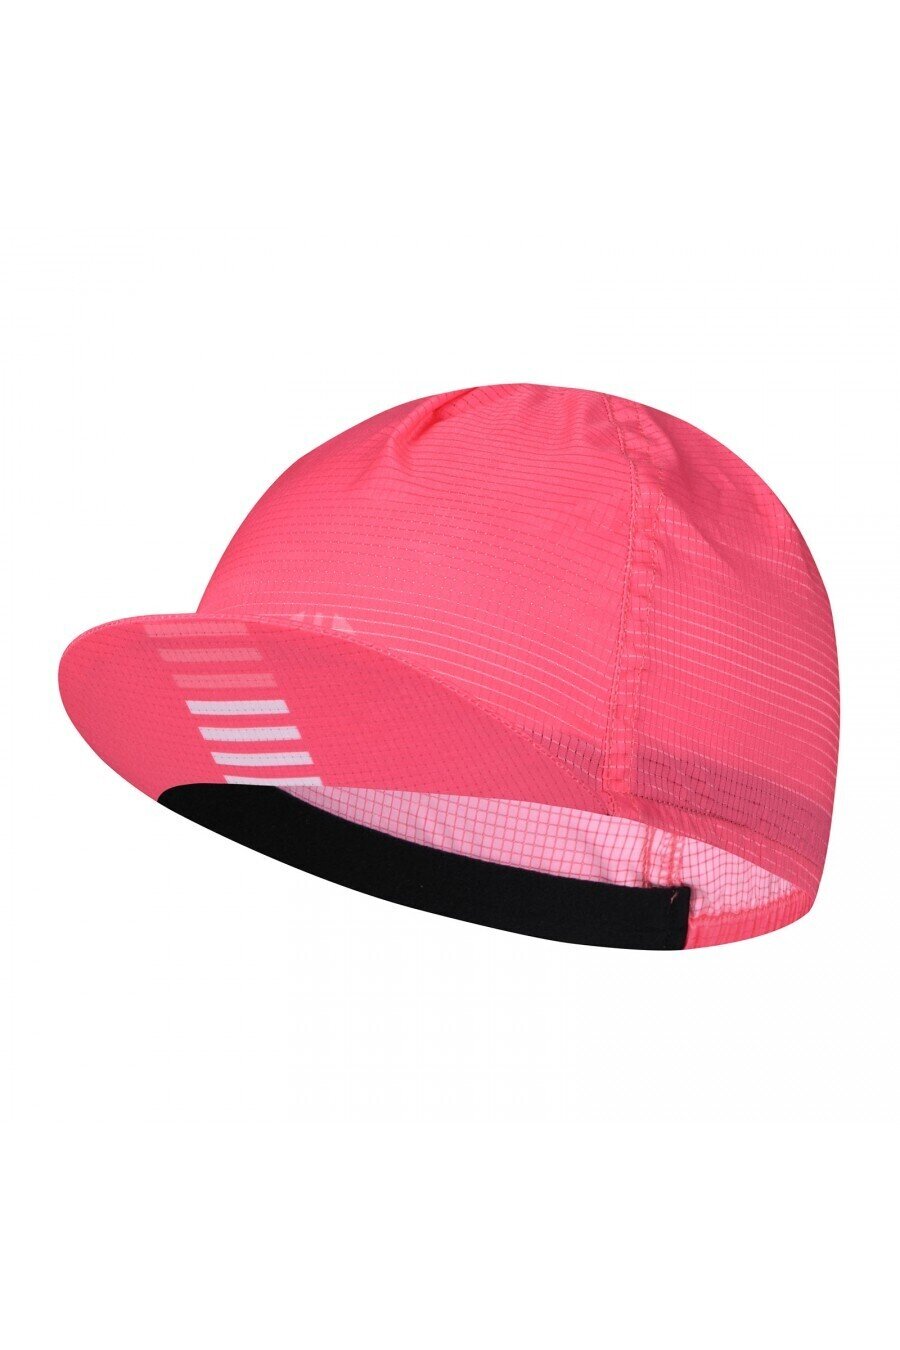 Monton SKULL Tuesday Pink Cap